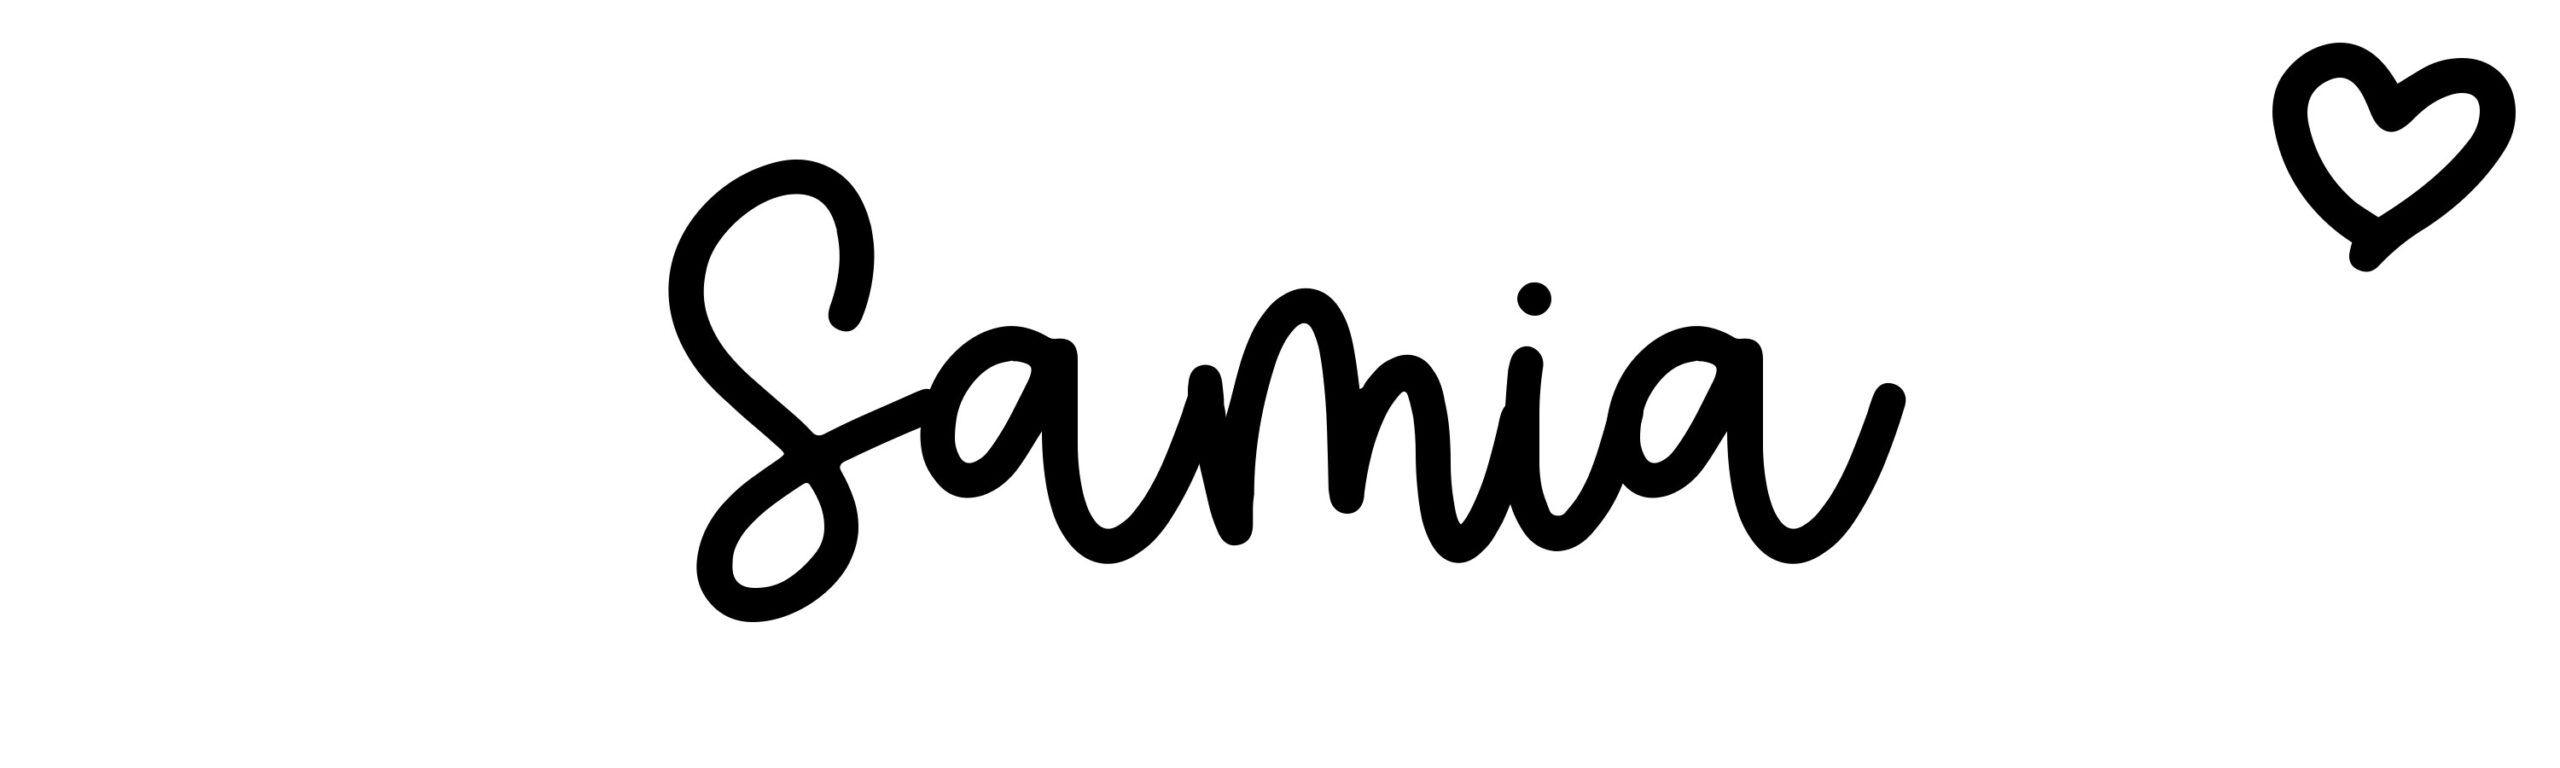 Samia Logo | Free Name Design Tool from Flaming Text